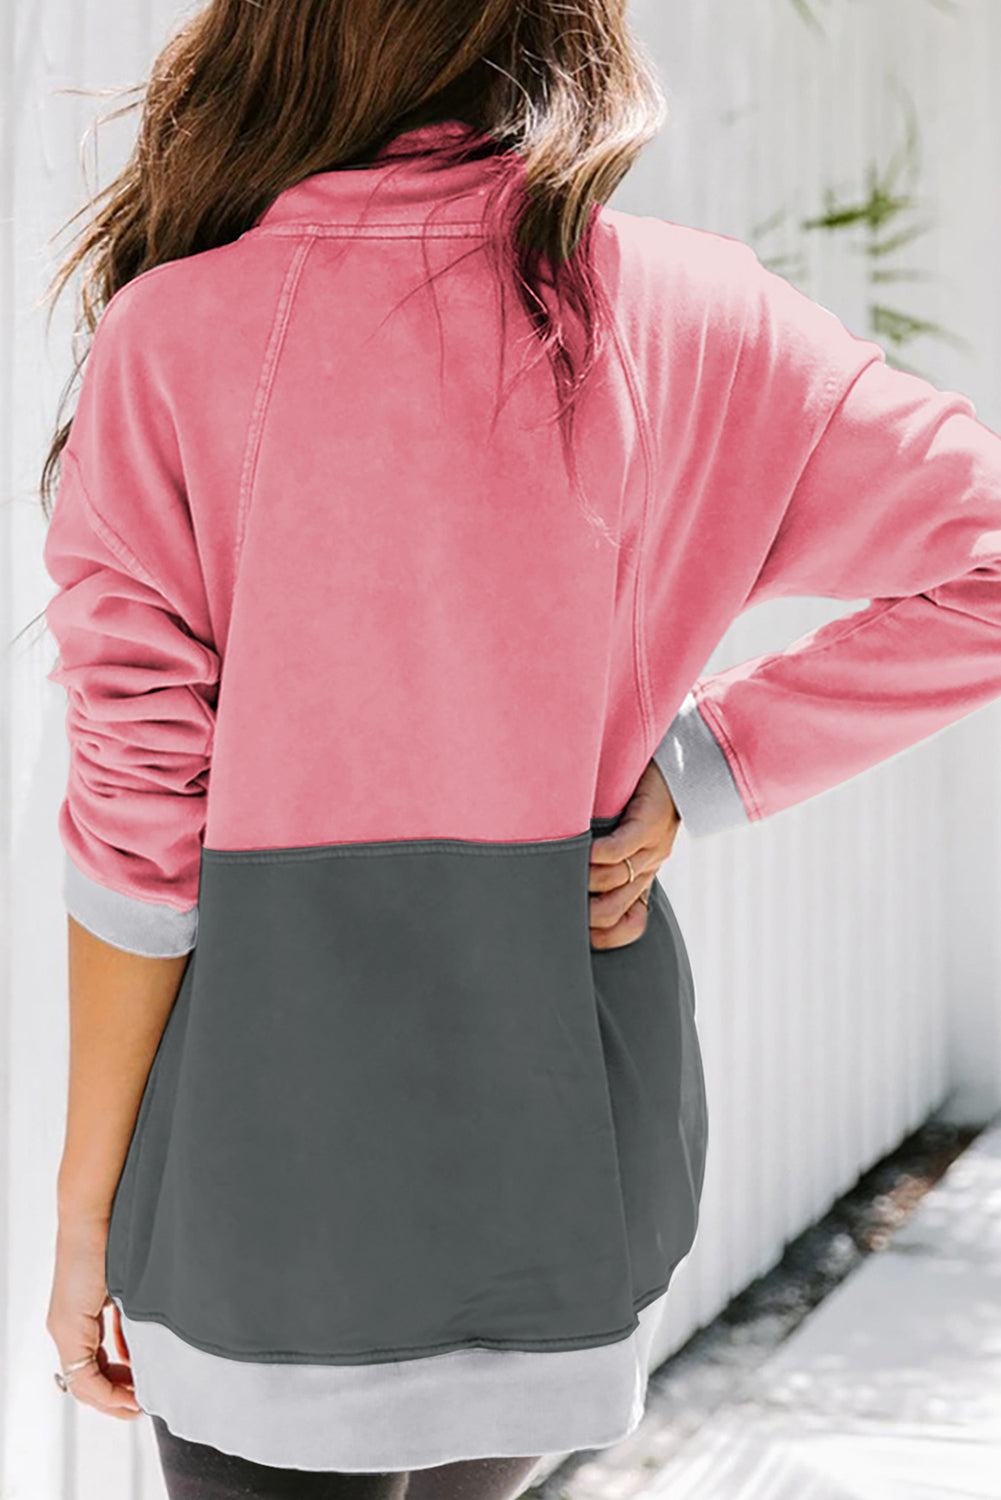 Pink Zipped Colorblock Sweatshirt with Pockets Item NO: 7910